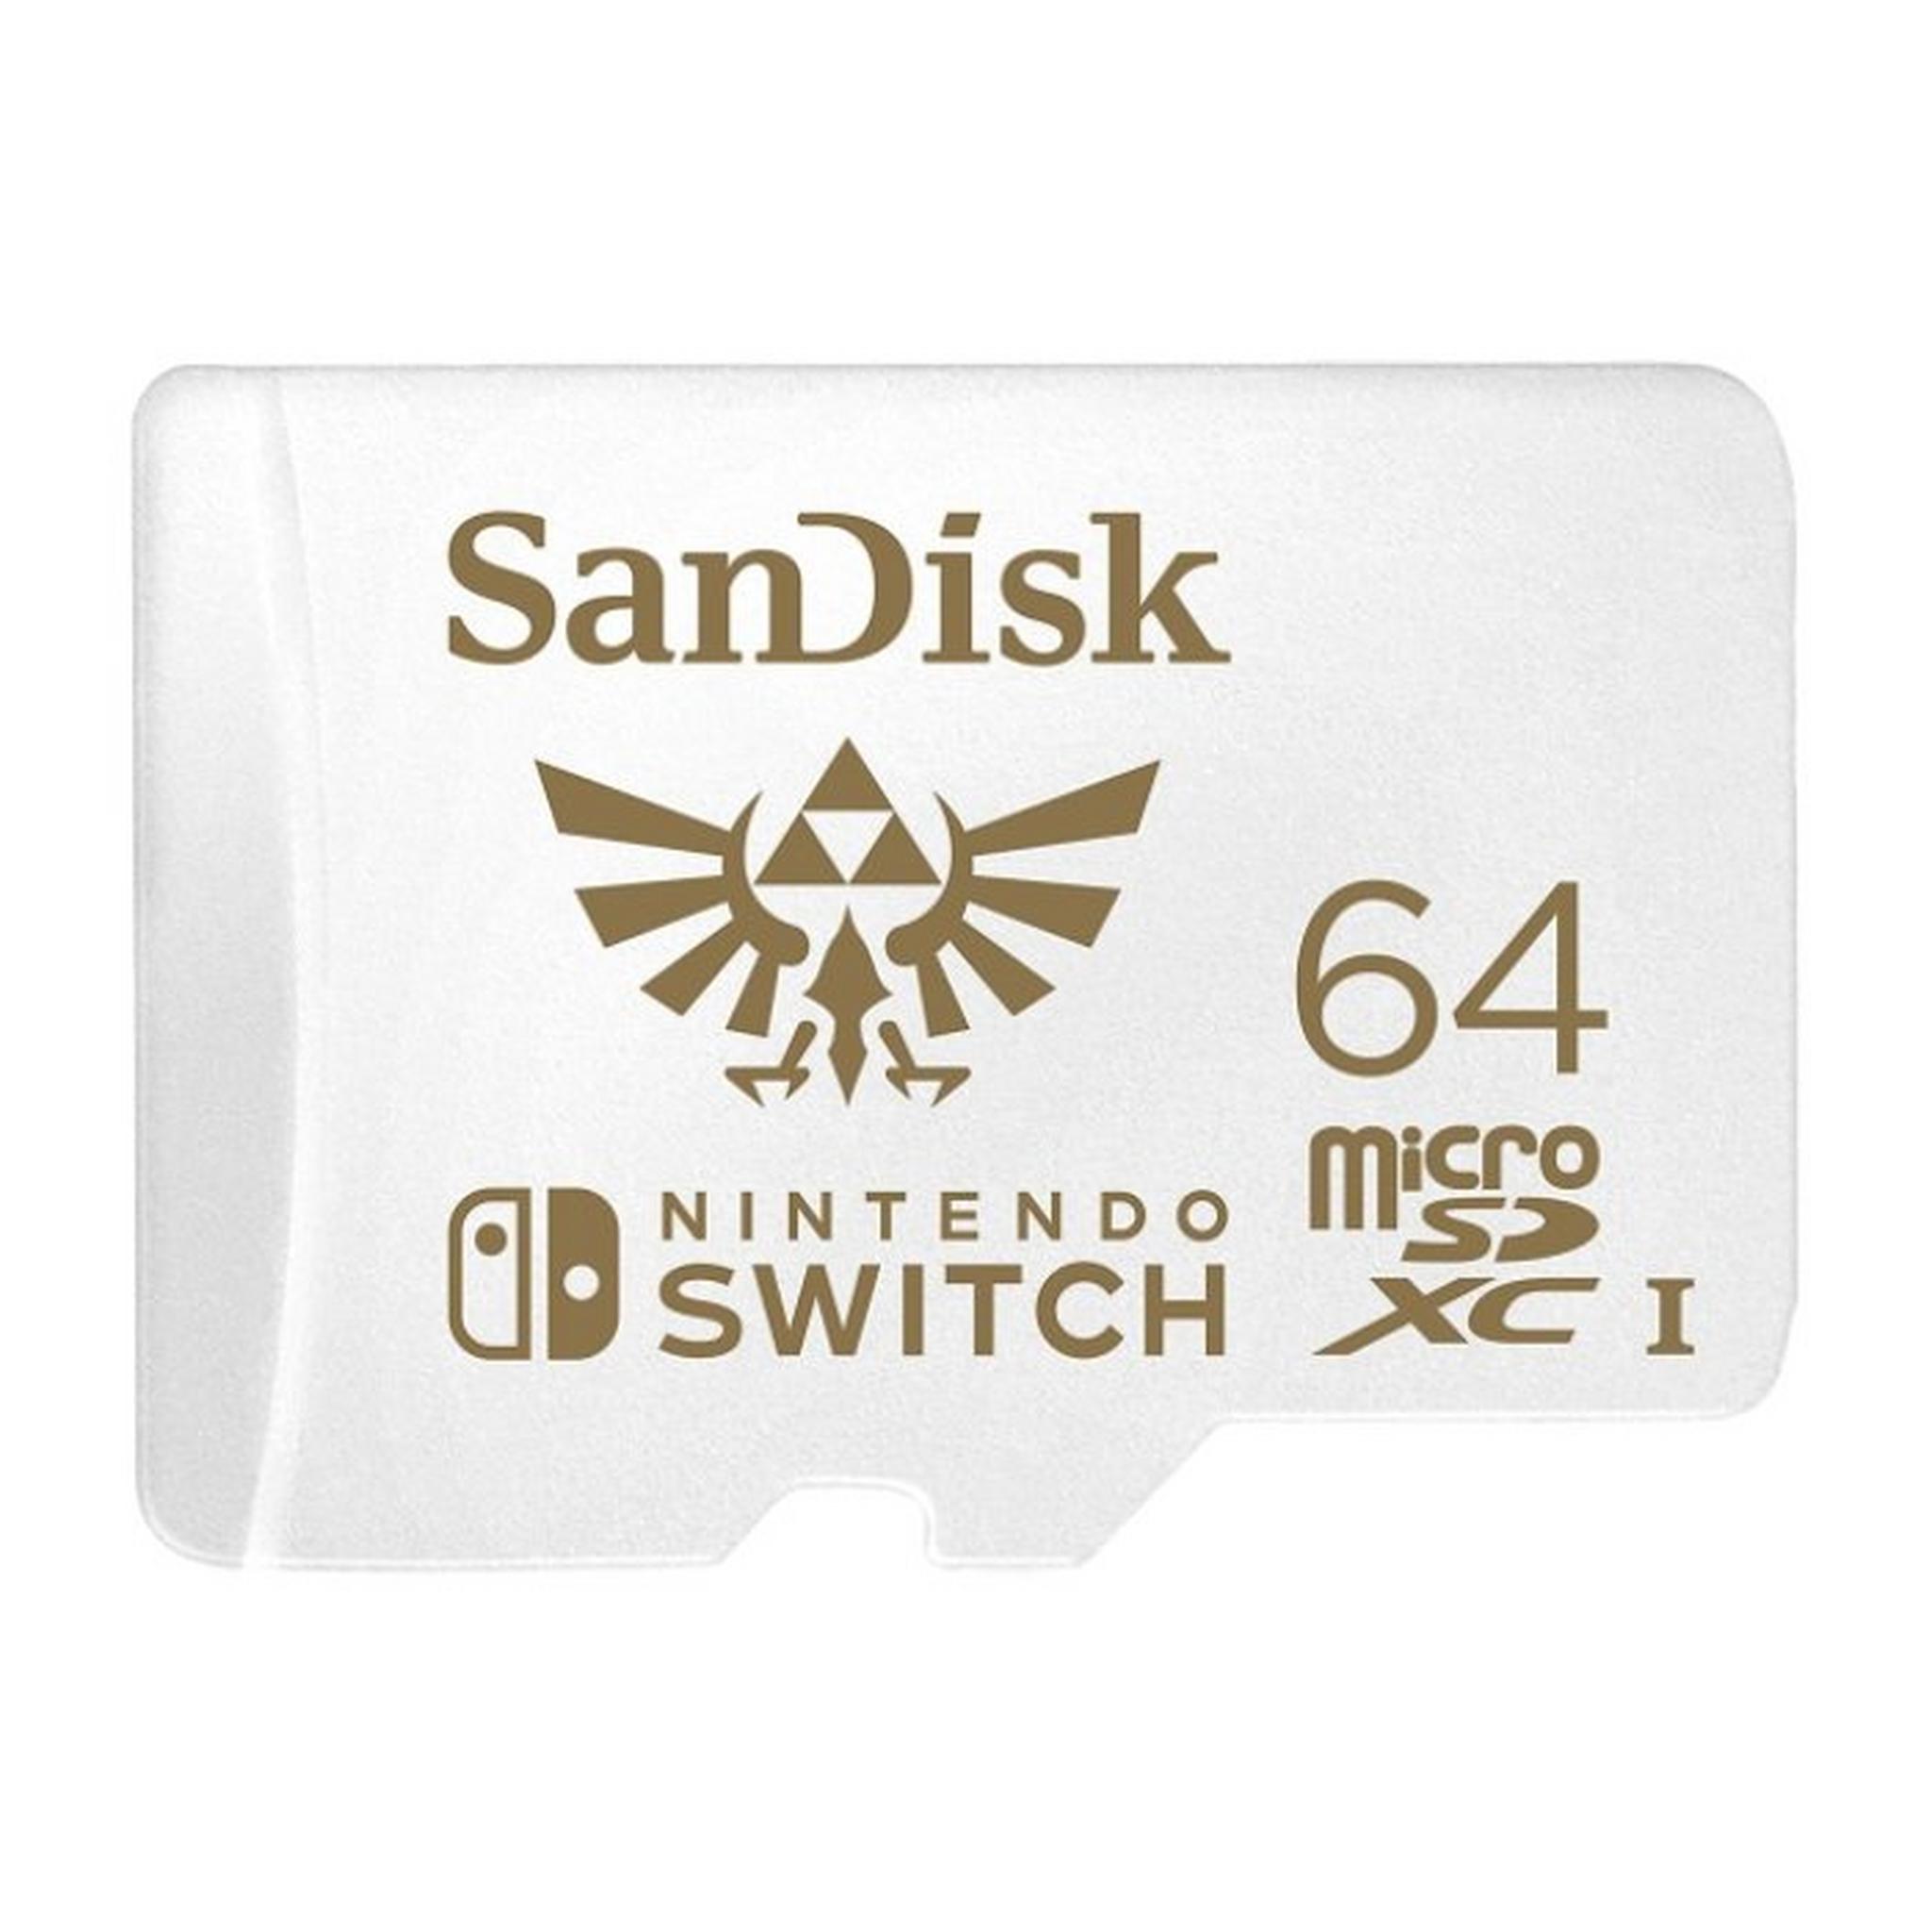 Sandisk 64GB UHS-I microSDXC Nintendo Switch Memory Card